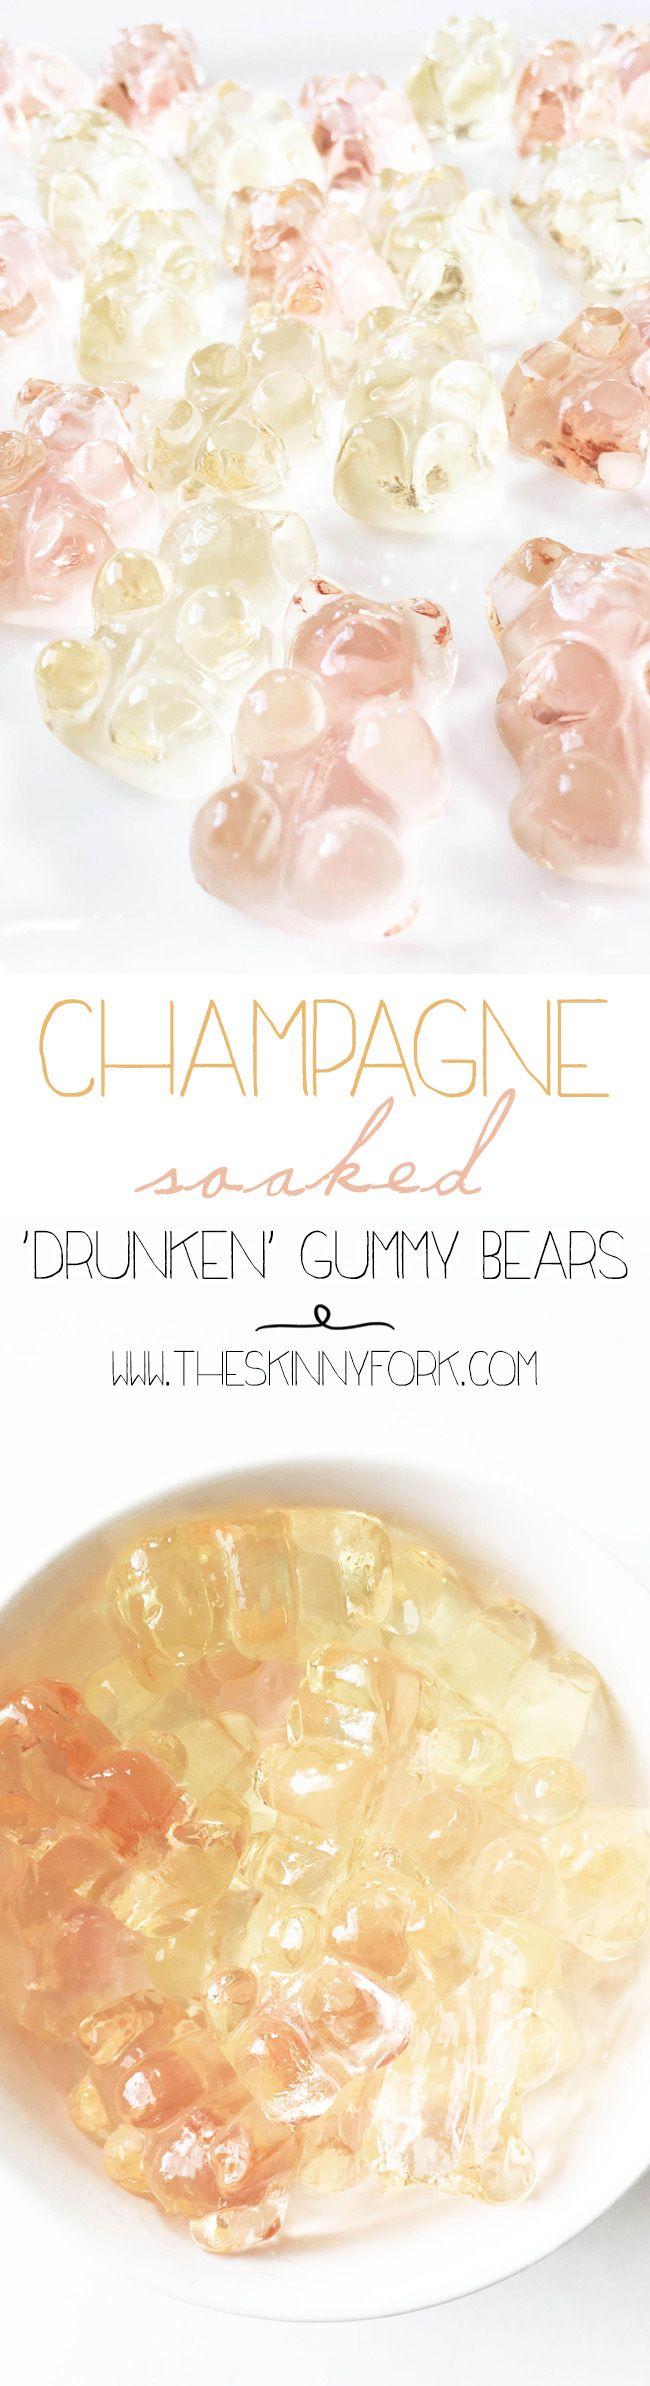 Wedding - Champagne Soaked 'Drunken' Gummy Bears